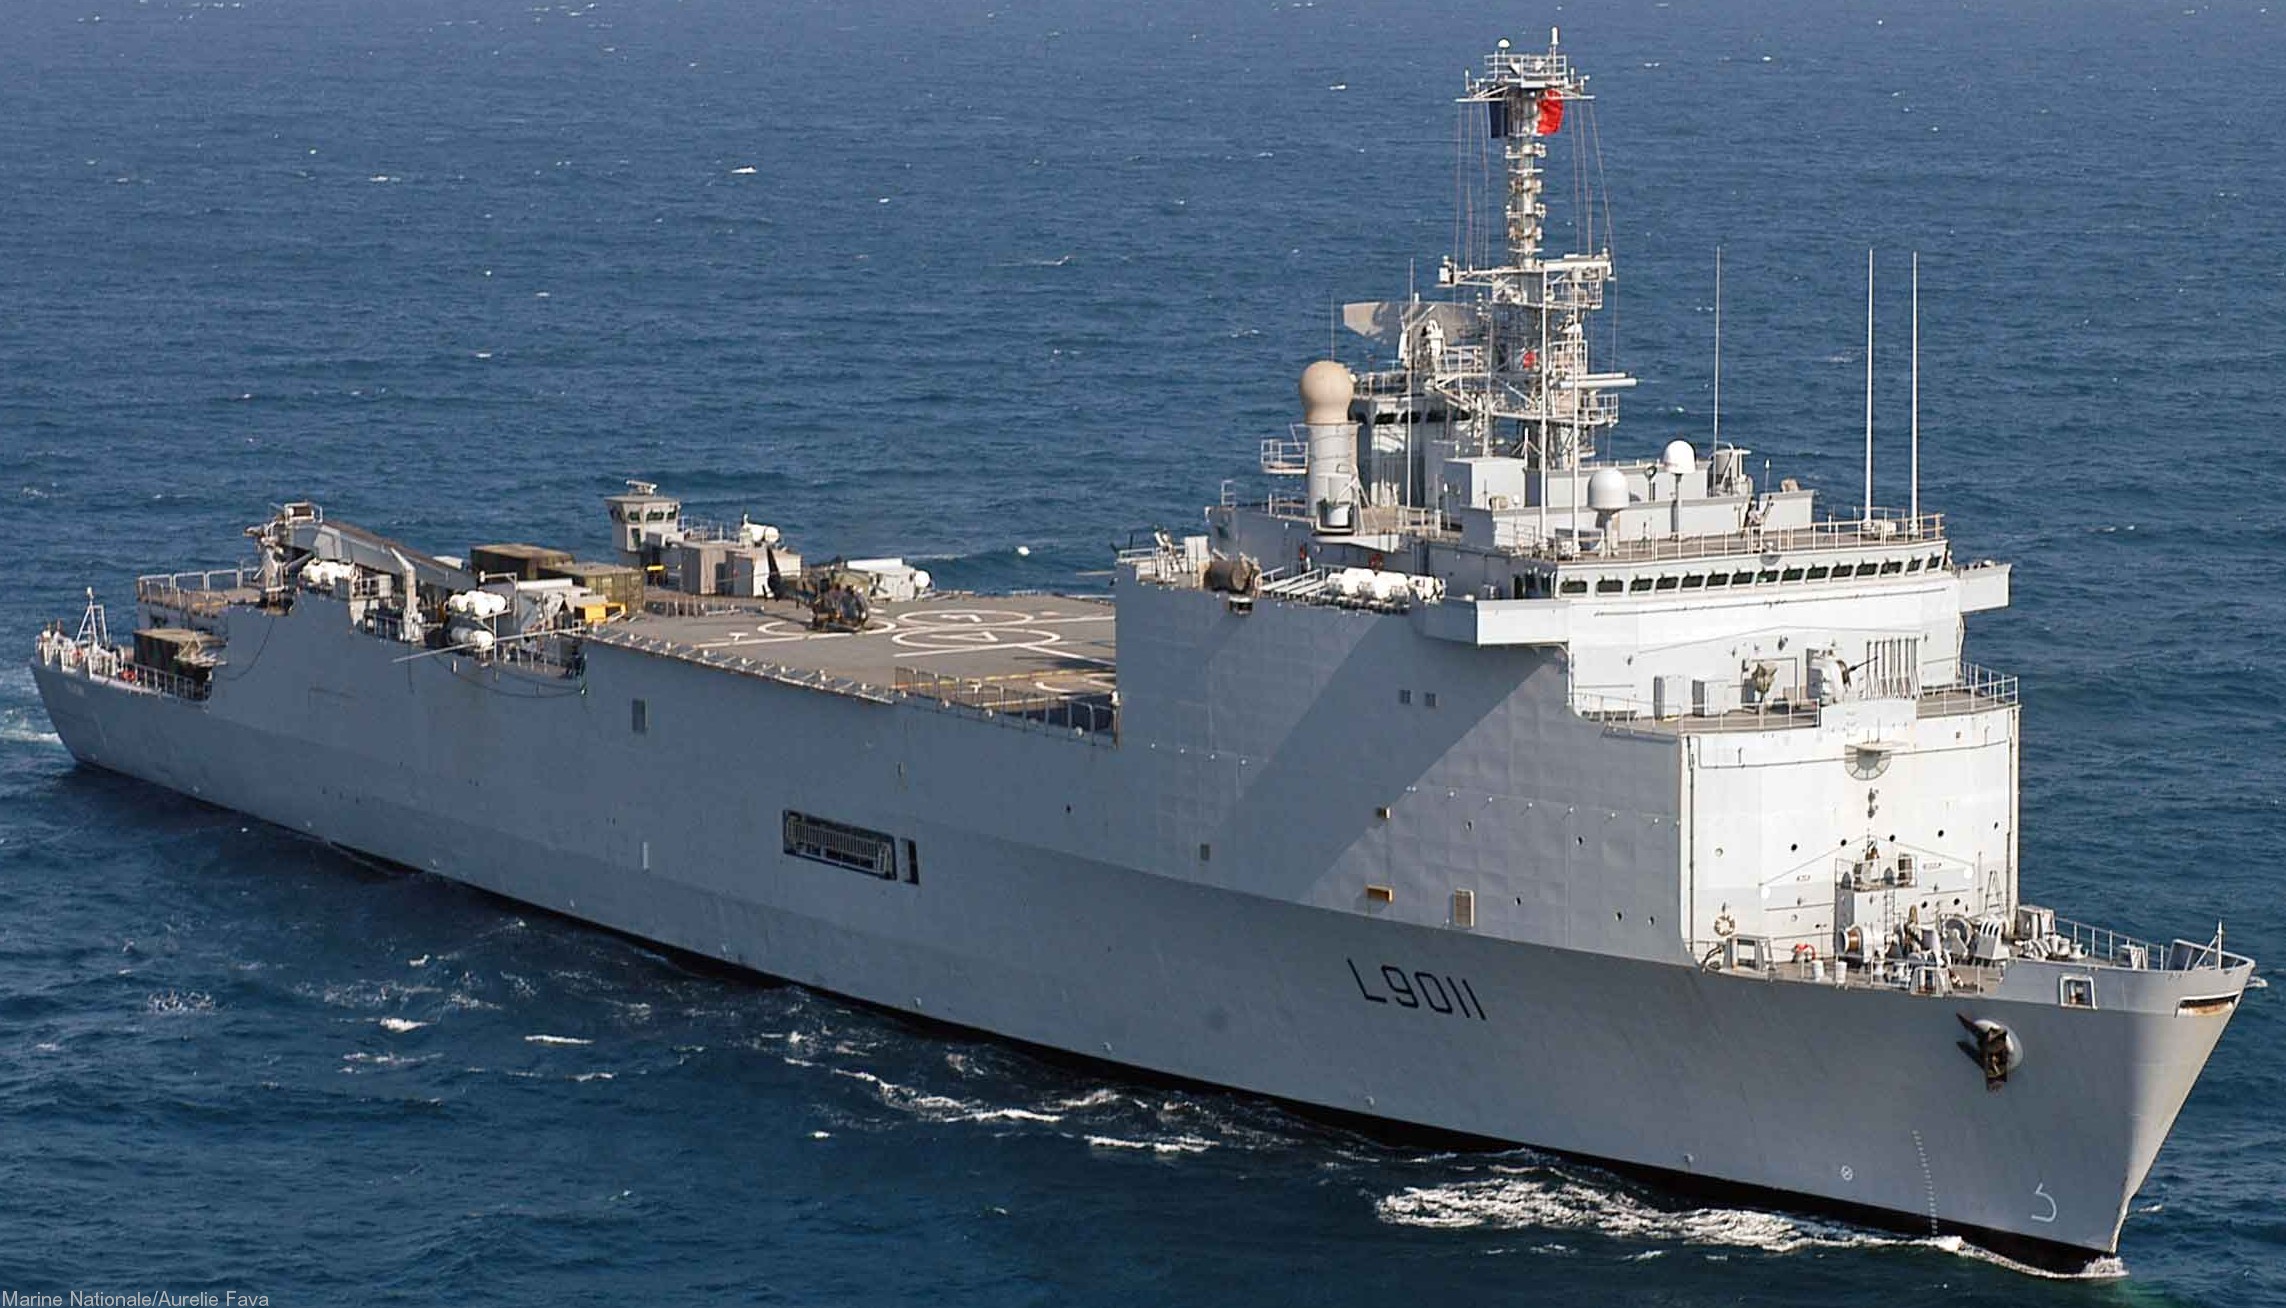 l-9011 fs foudre amphibious landing ship platform dock lpd french navy marine nationale tcd 04